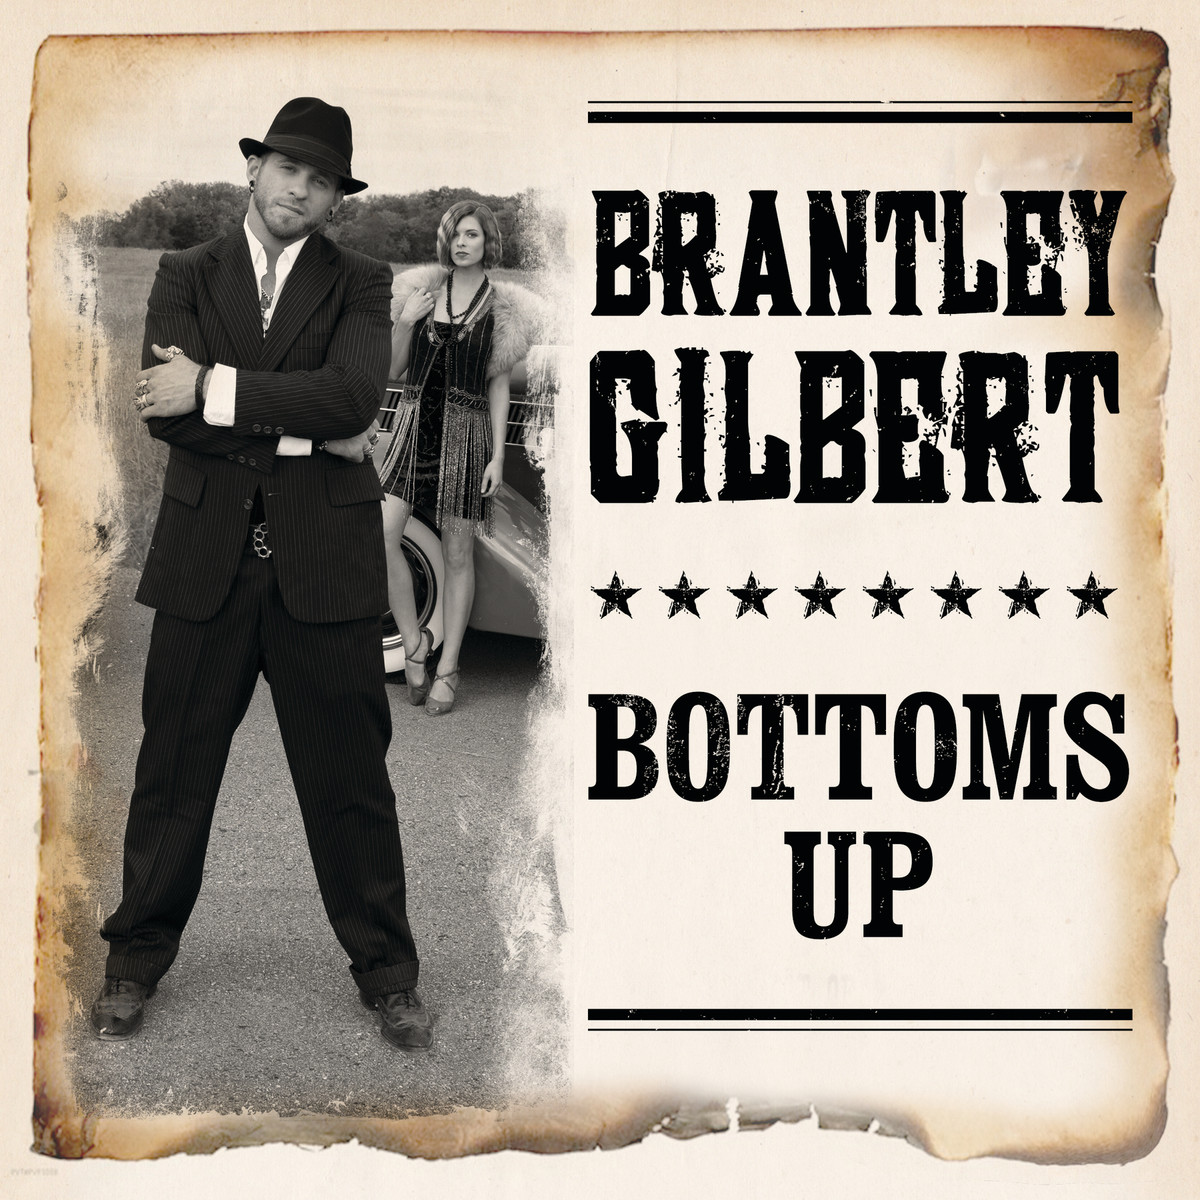 Brantley Gilbert Bottoms Up profile image